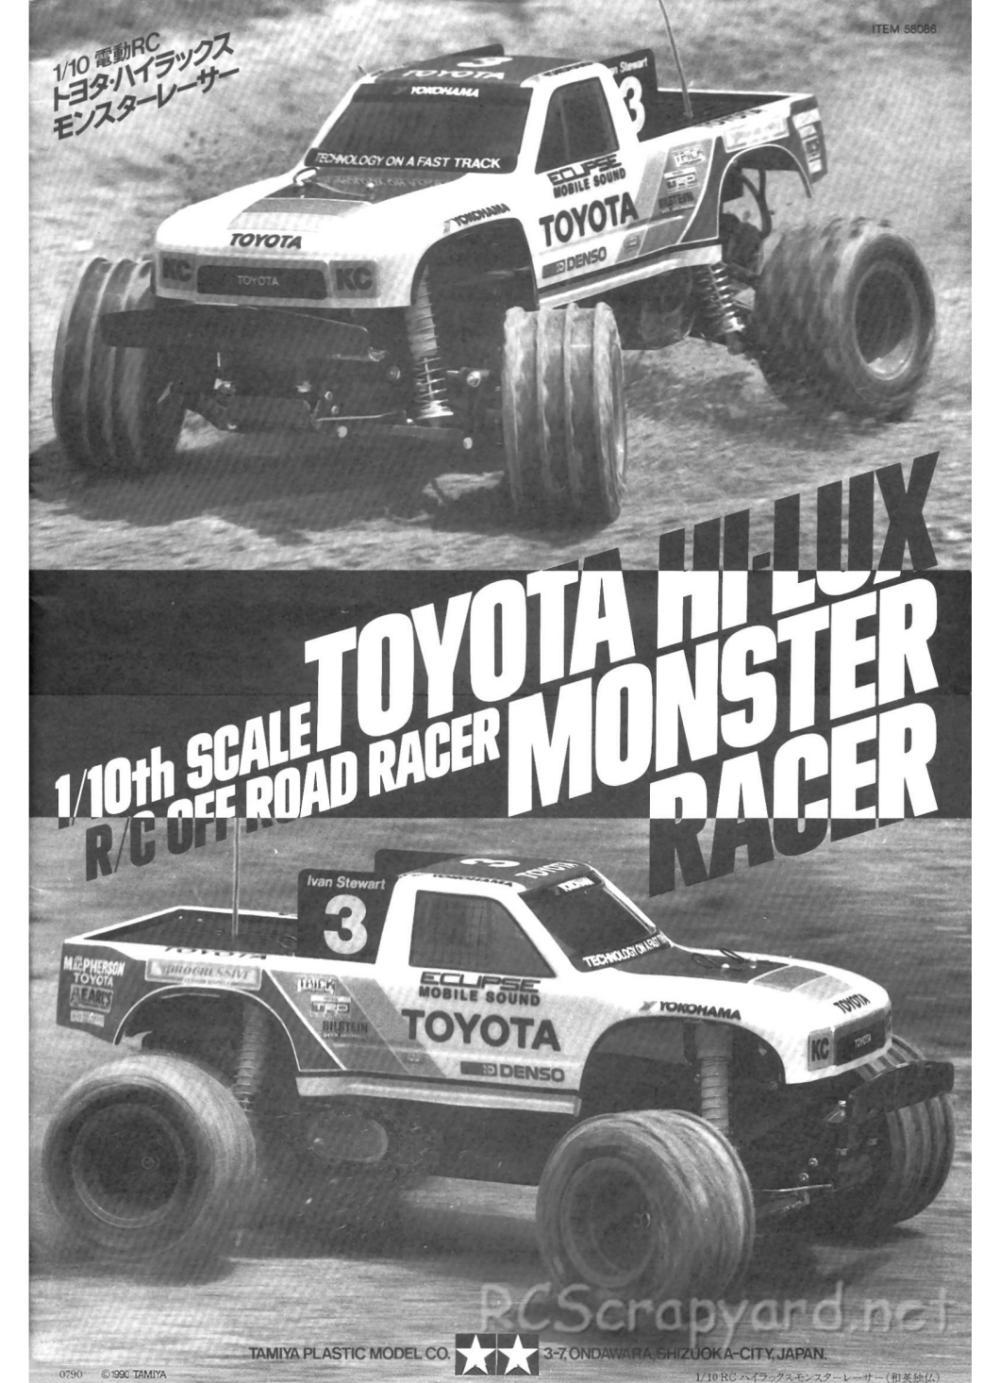 Tamiya - Toyota Hilux Monster Racer - 58086 - Manual